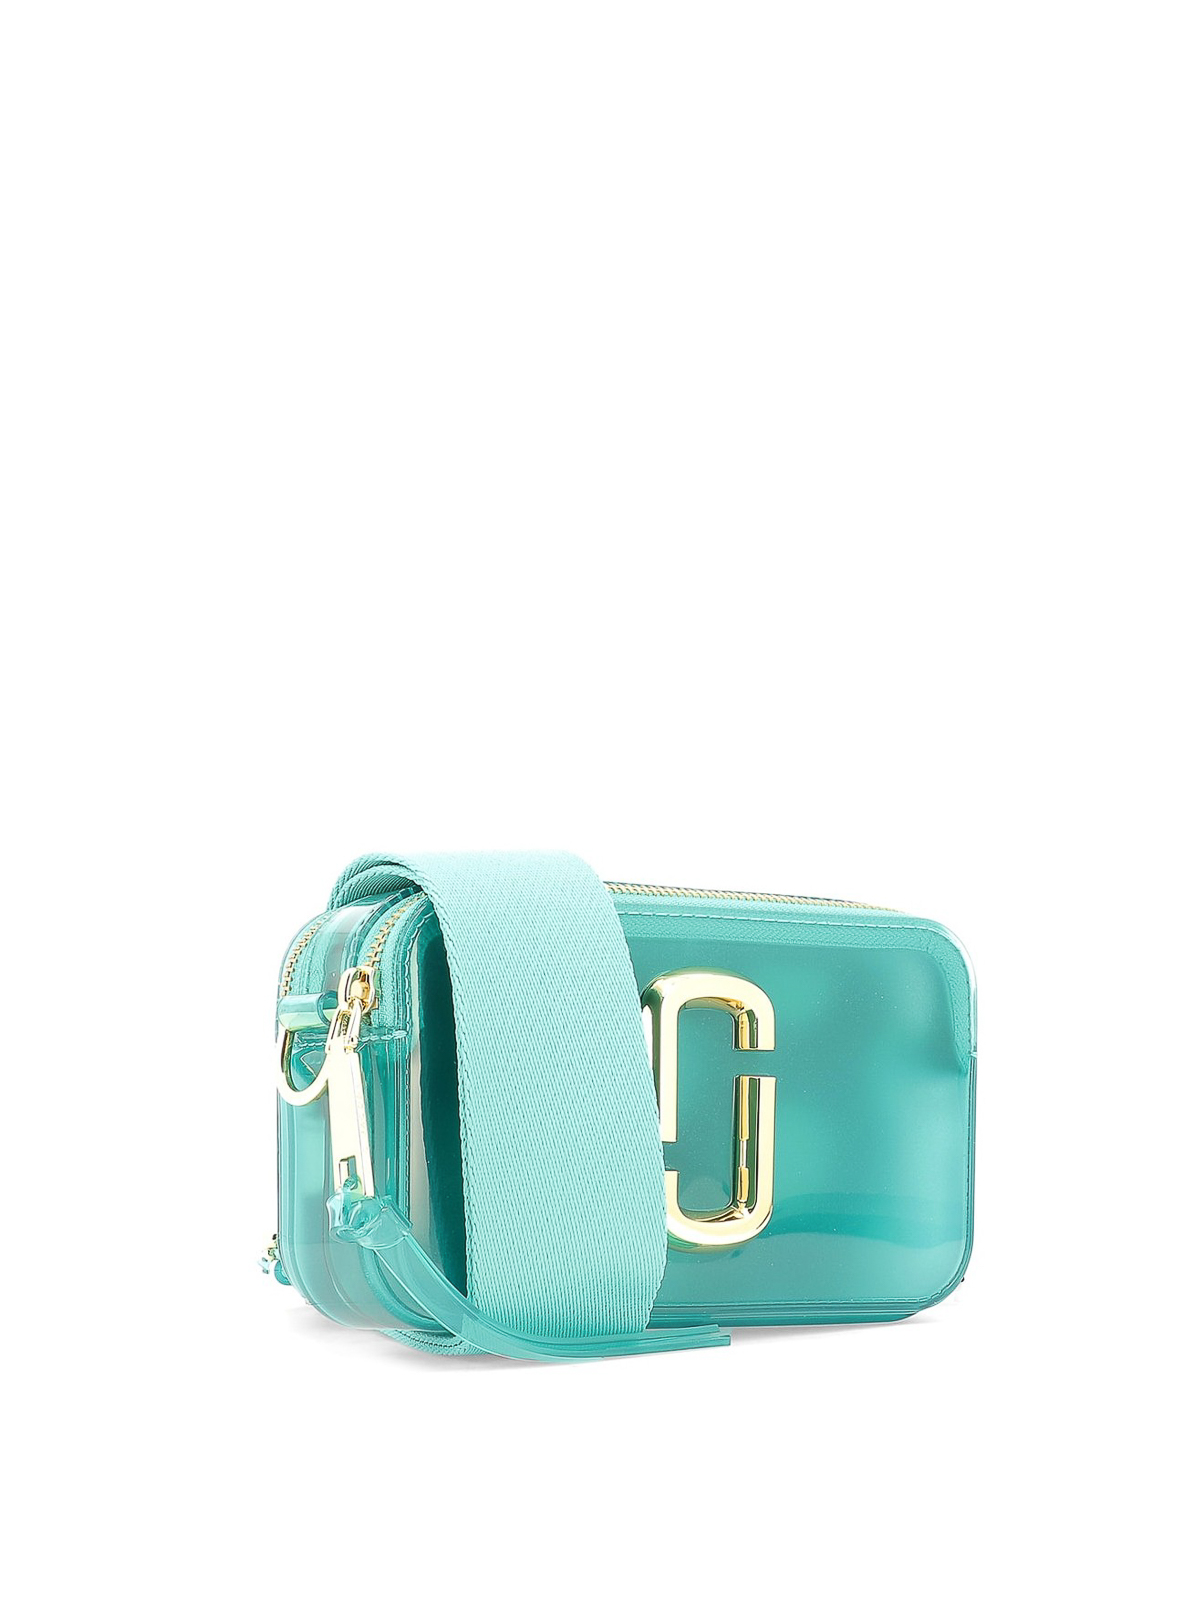 Marc Jacobs Women's Snapshot Camera Bag, Blue Sea Multi, One Size  M0014146-424